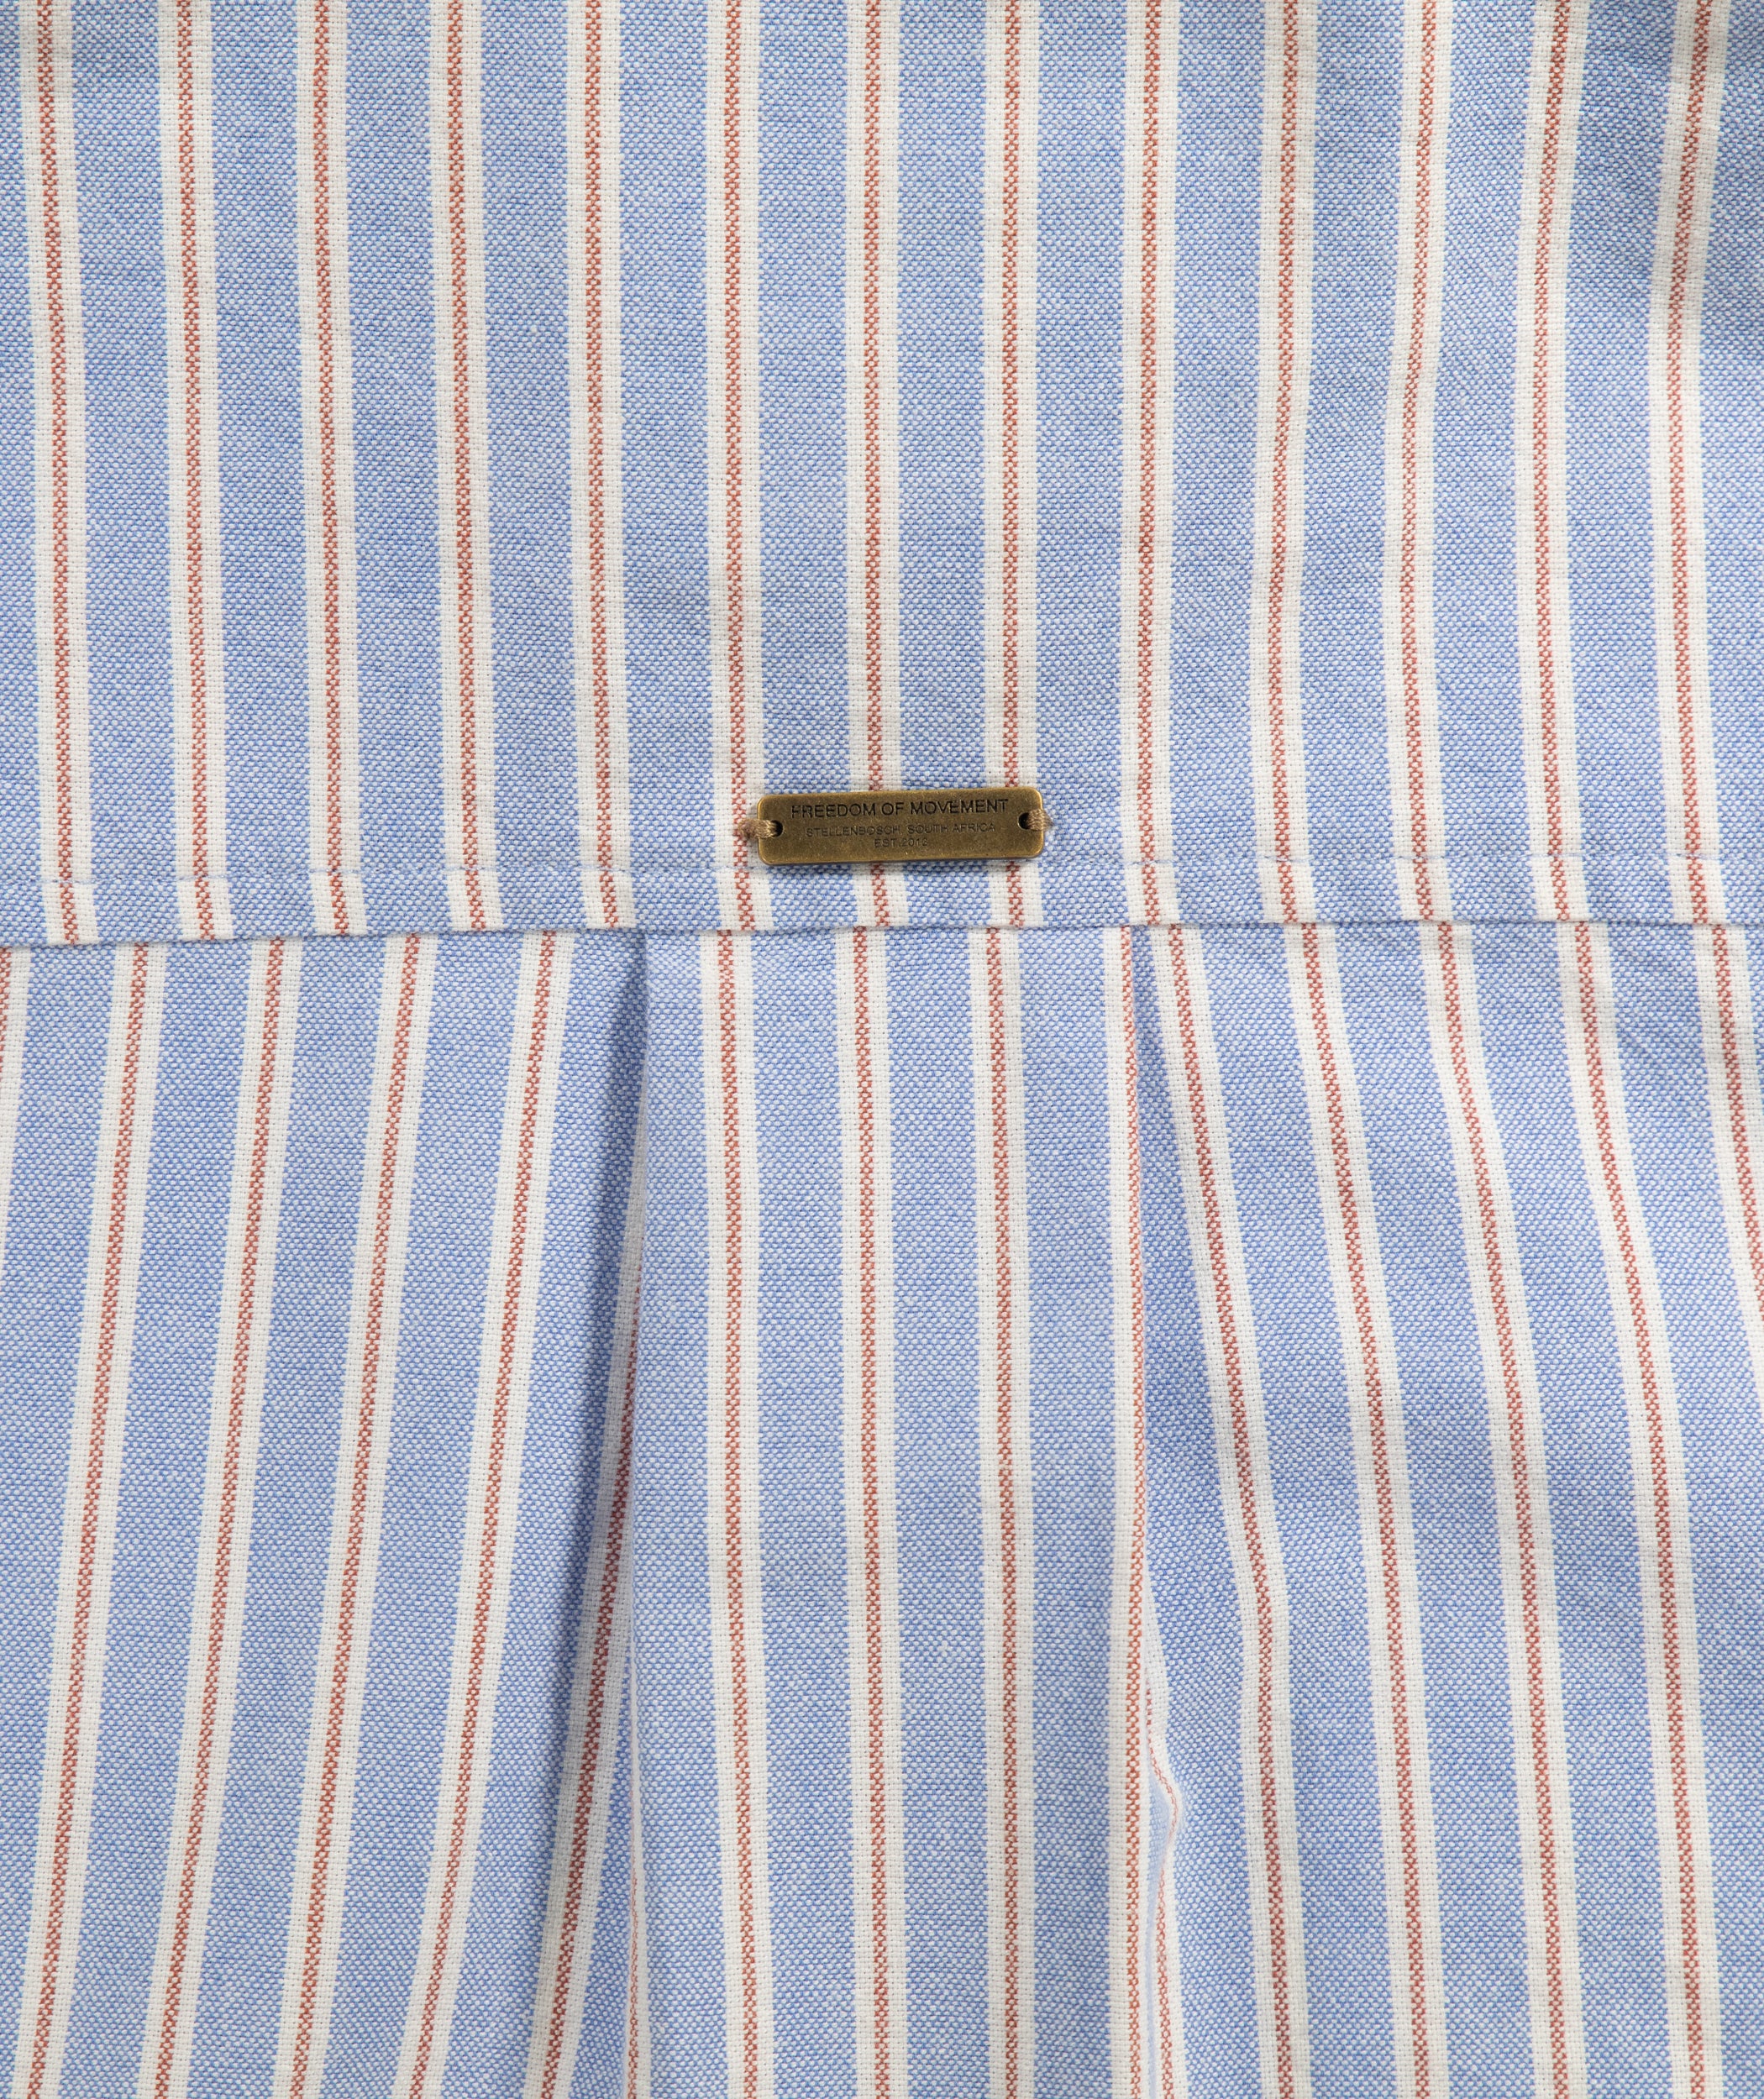 Ladies Oxford Long Sleeve Shirt - Sky Blue Stripe